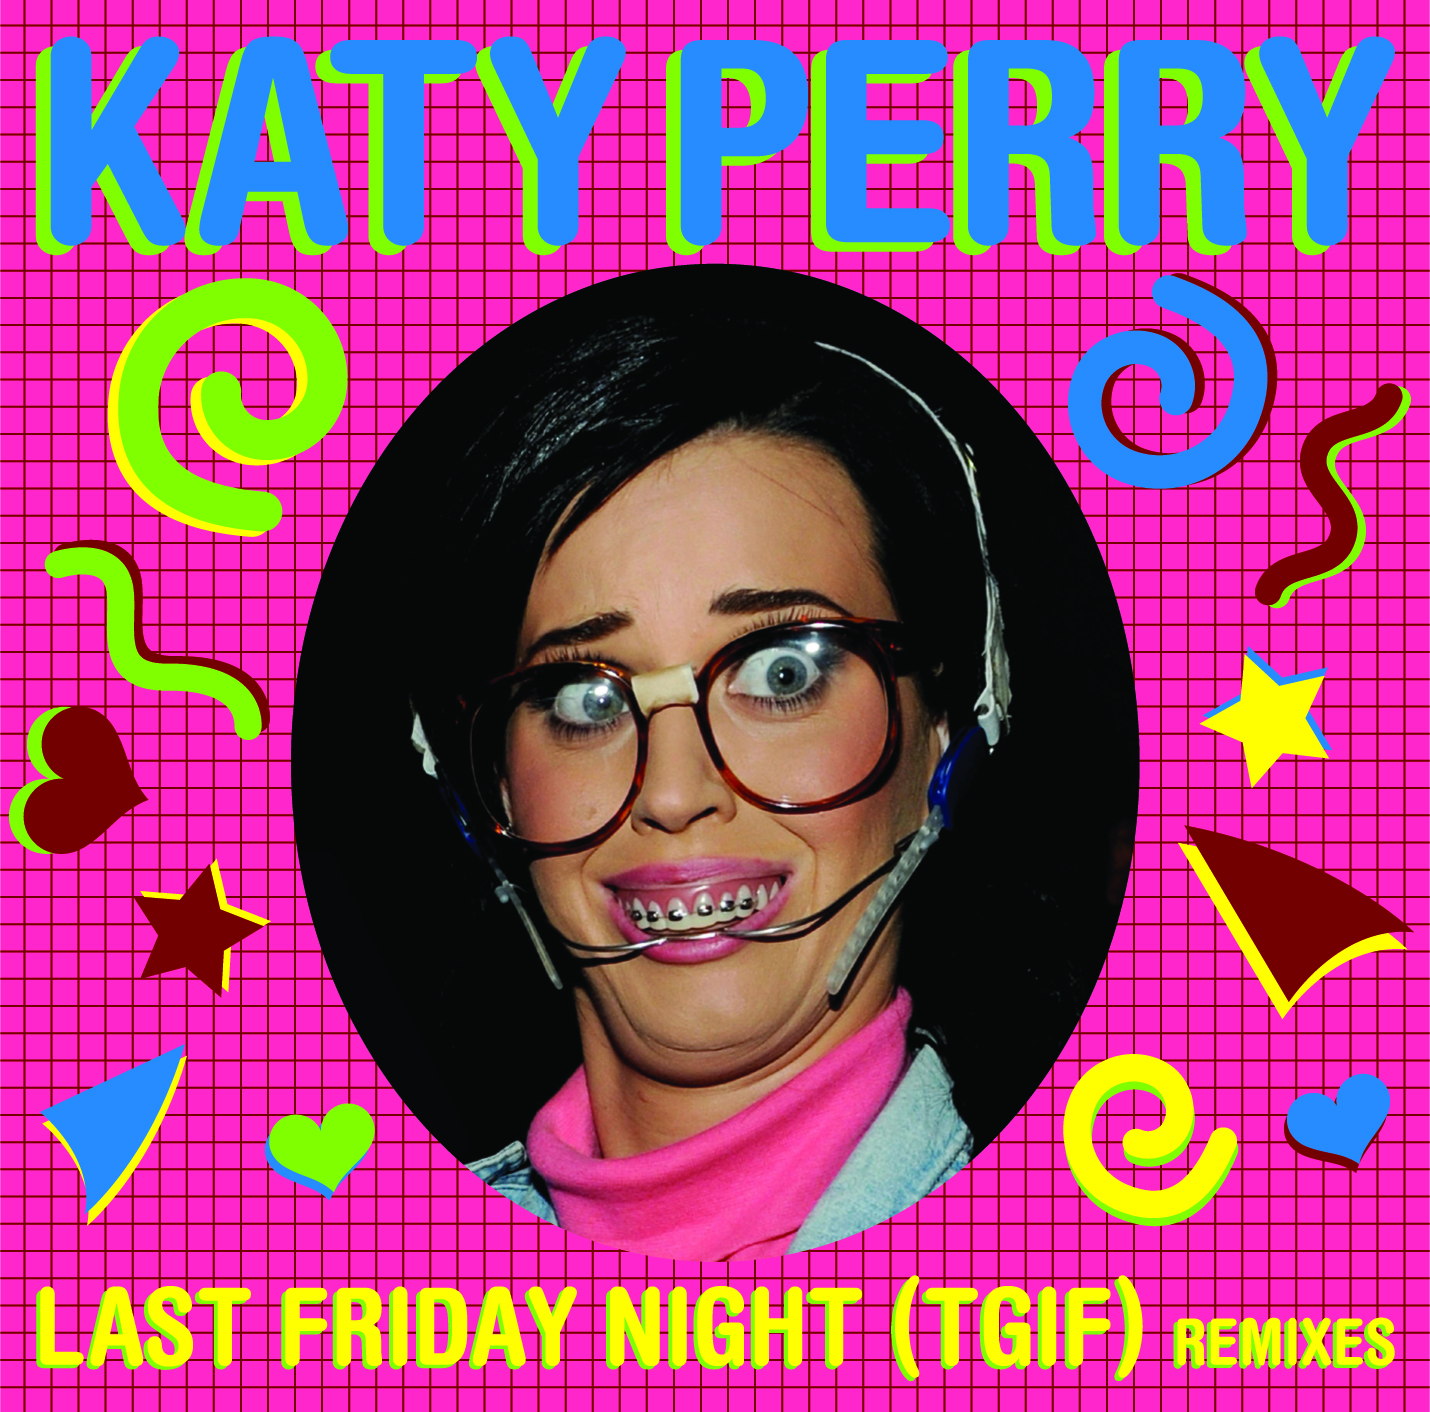 Last friday night pluggnb. Кэти Перри в брикетах. Кэти Перри Фрайдей Найт. Кэти Перри в очках. Last Friday Night Katy Perry обложка.